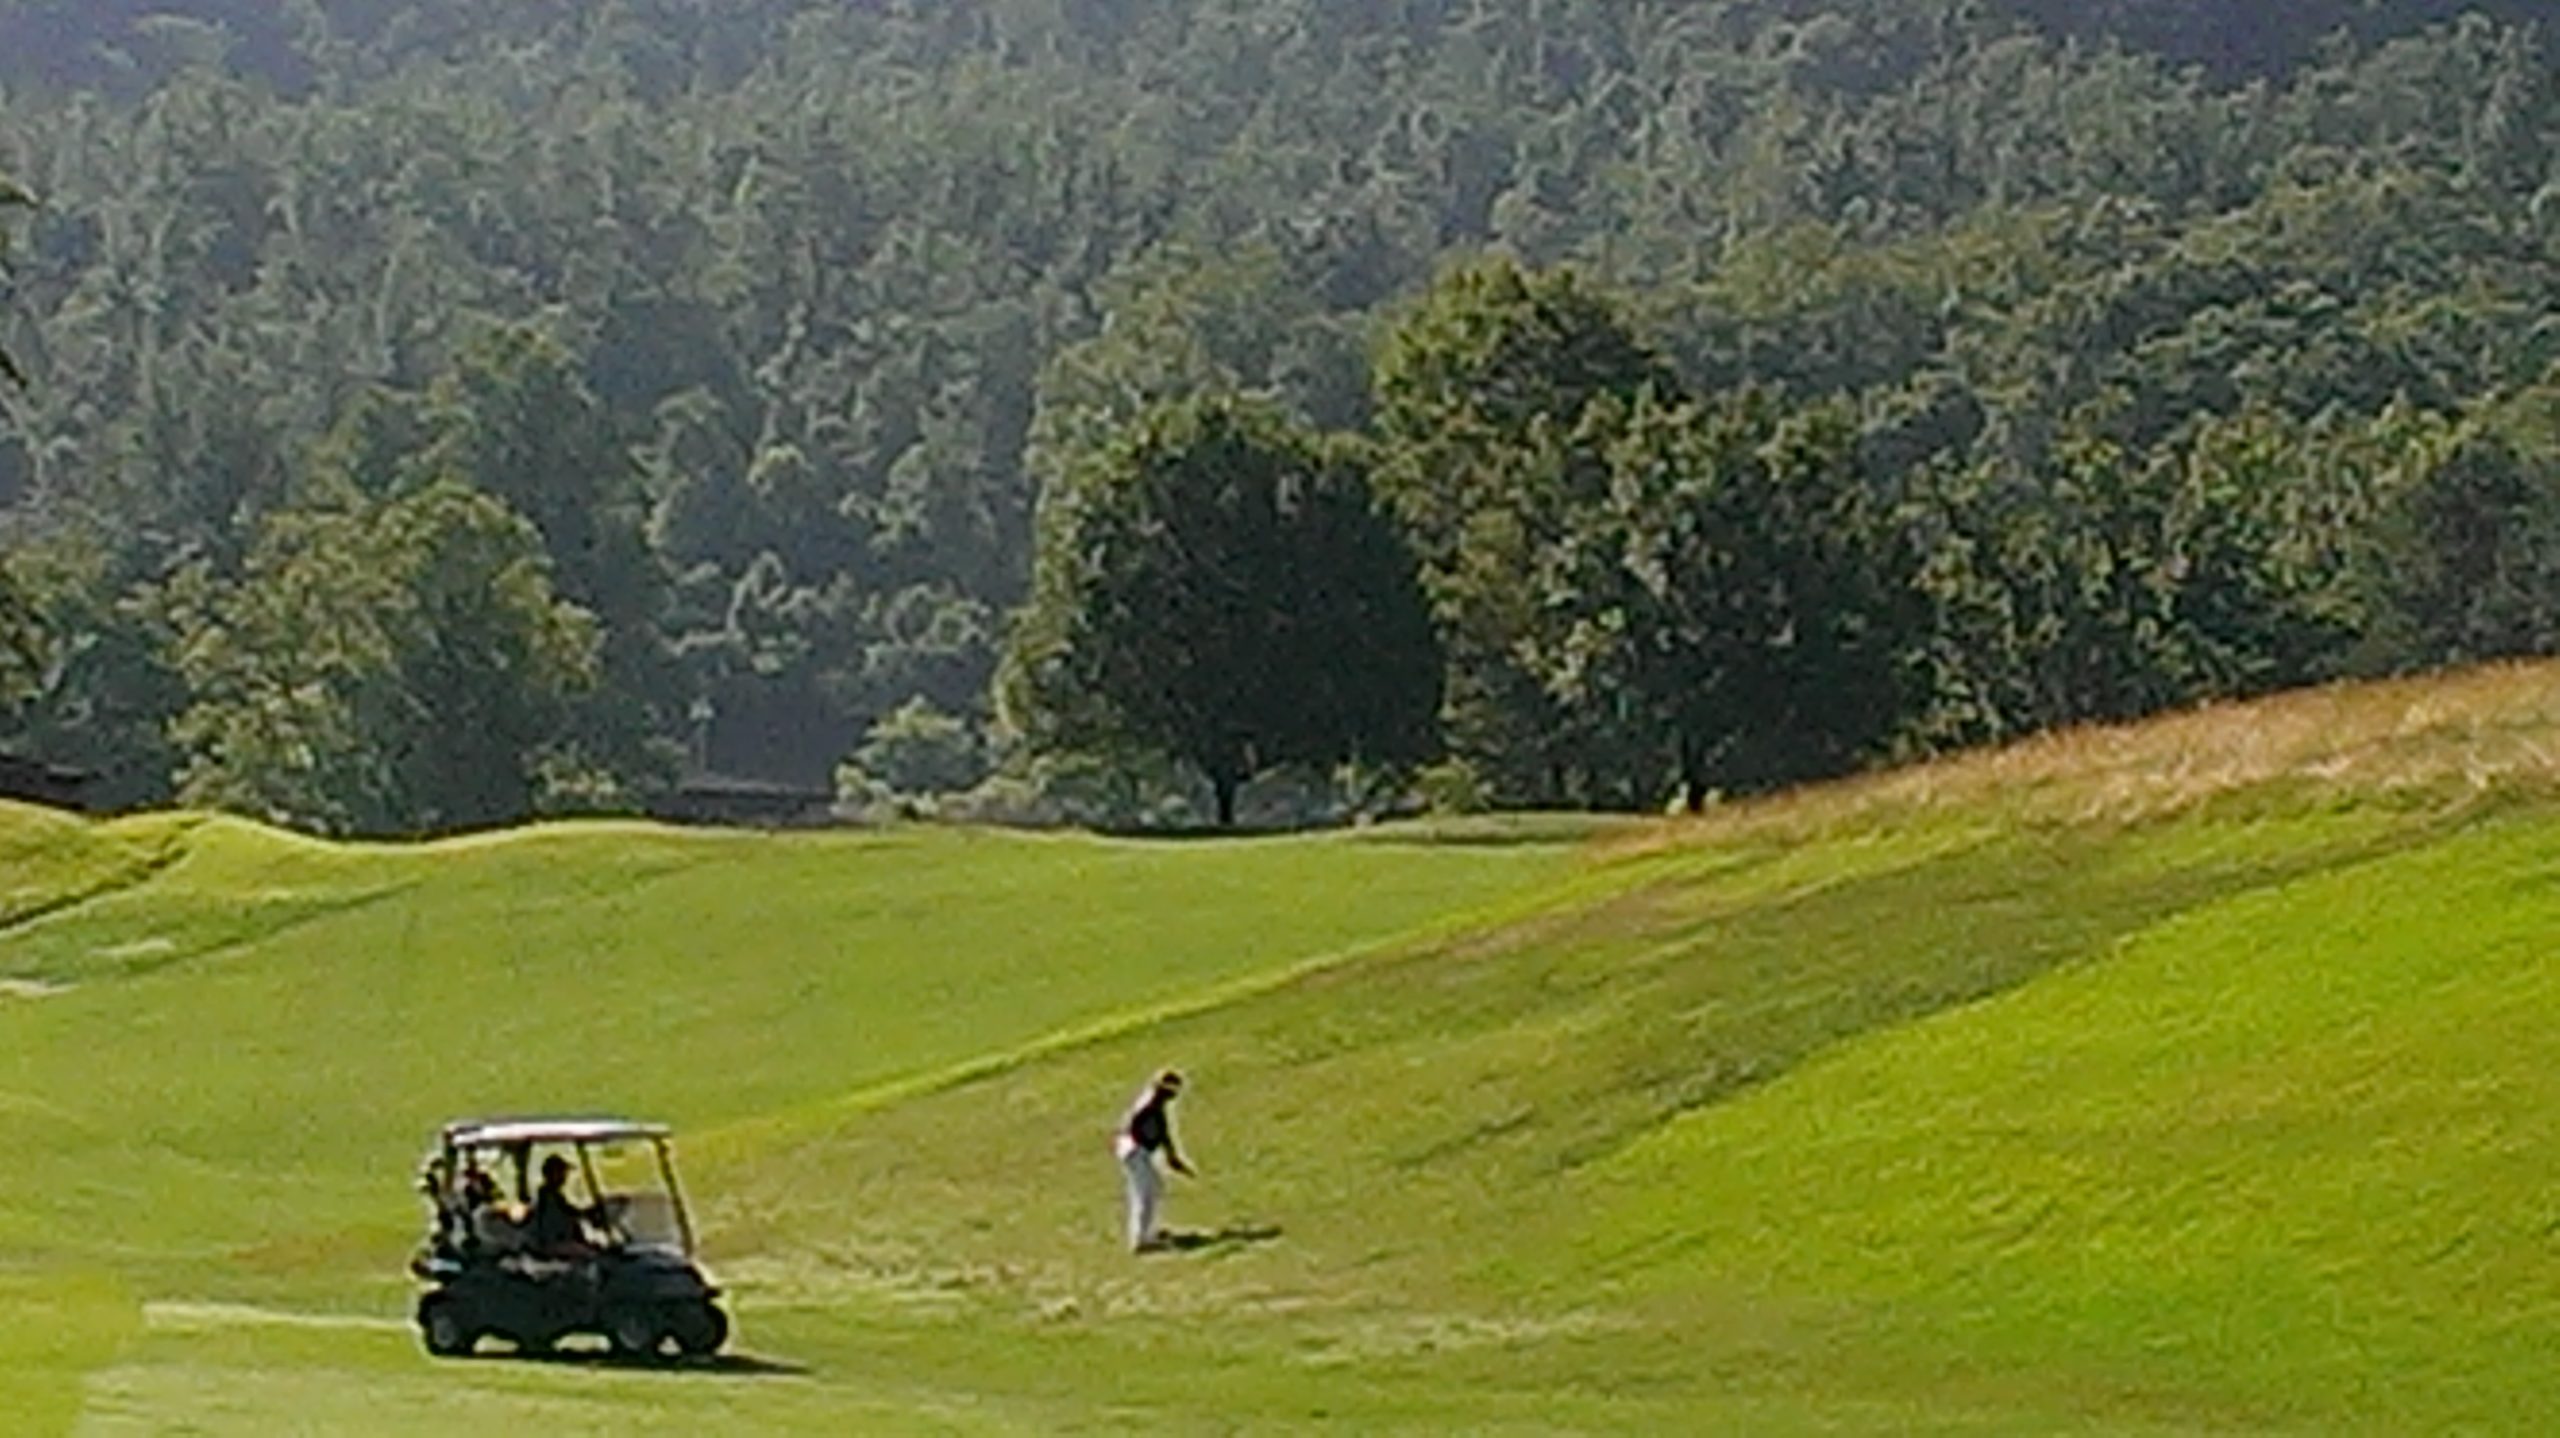 Lonesome Pine Golf Club